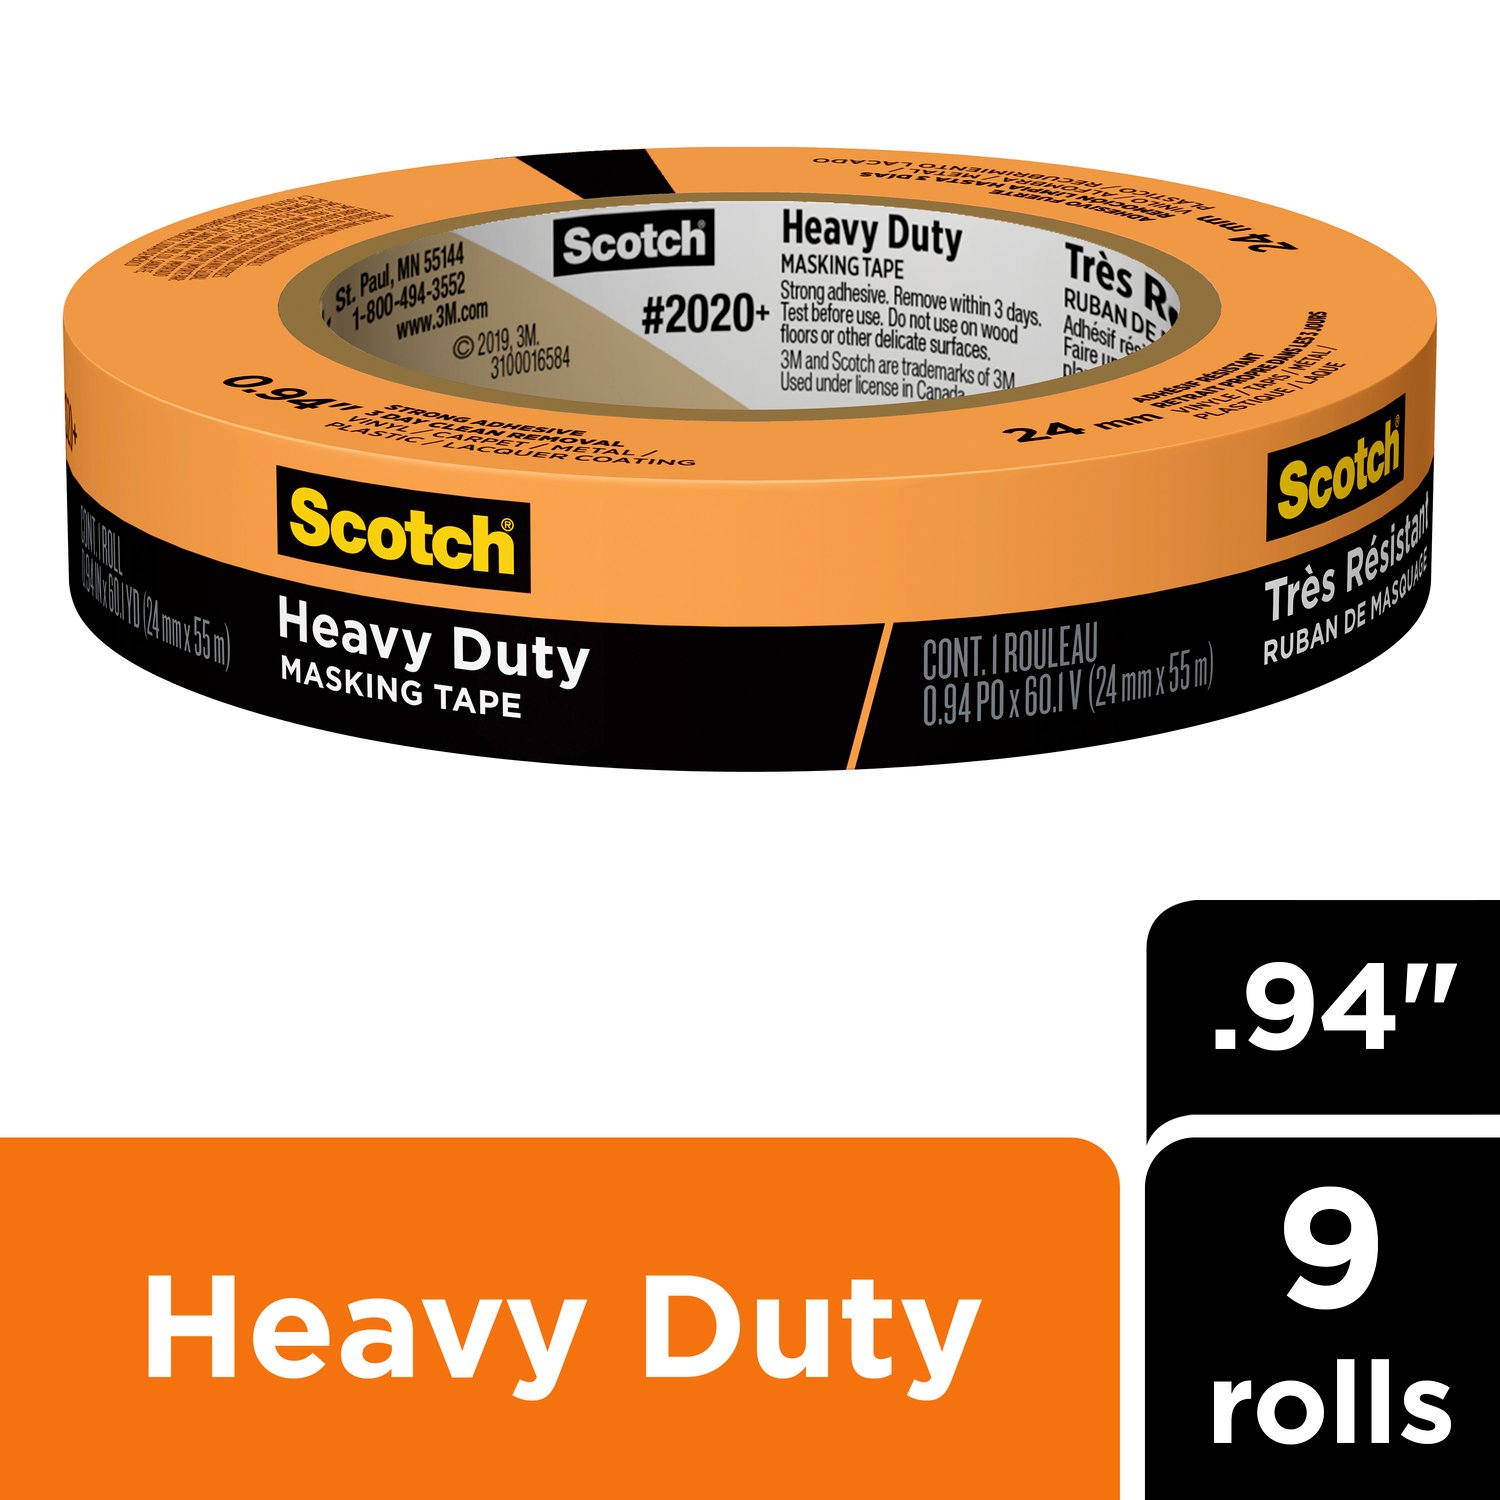 7100191064 - Scotch Heavy Duty Masking Tape 2020+-24AP9, 0.94 in x 60.1 yd (24mm x
55m), 9 rolls/pack